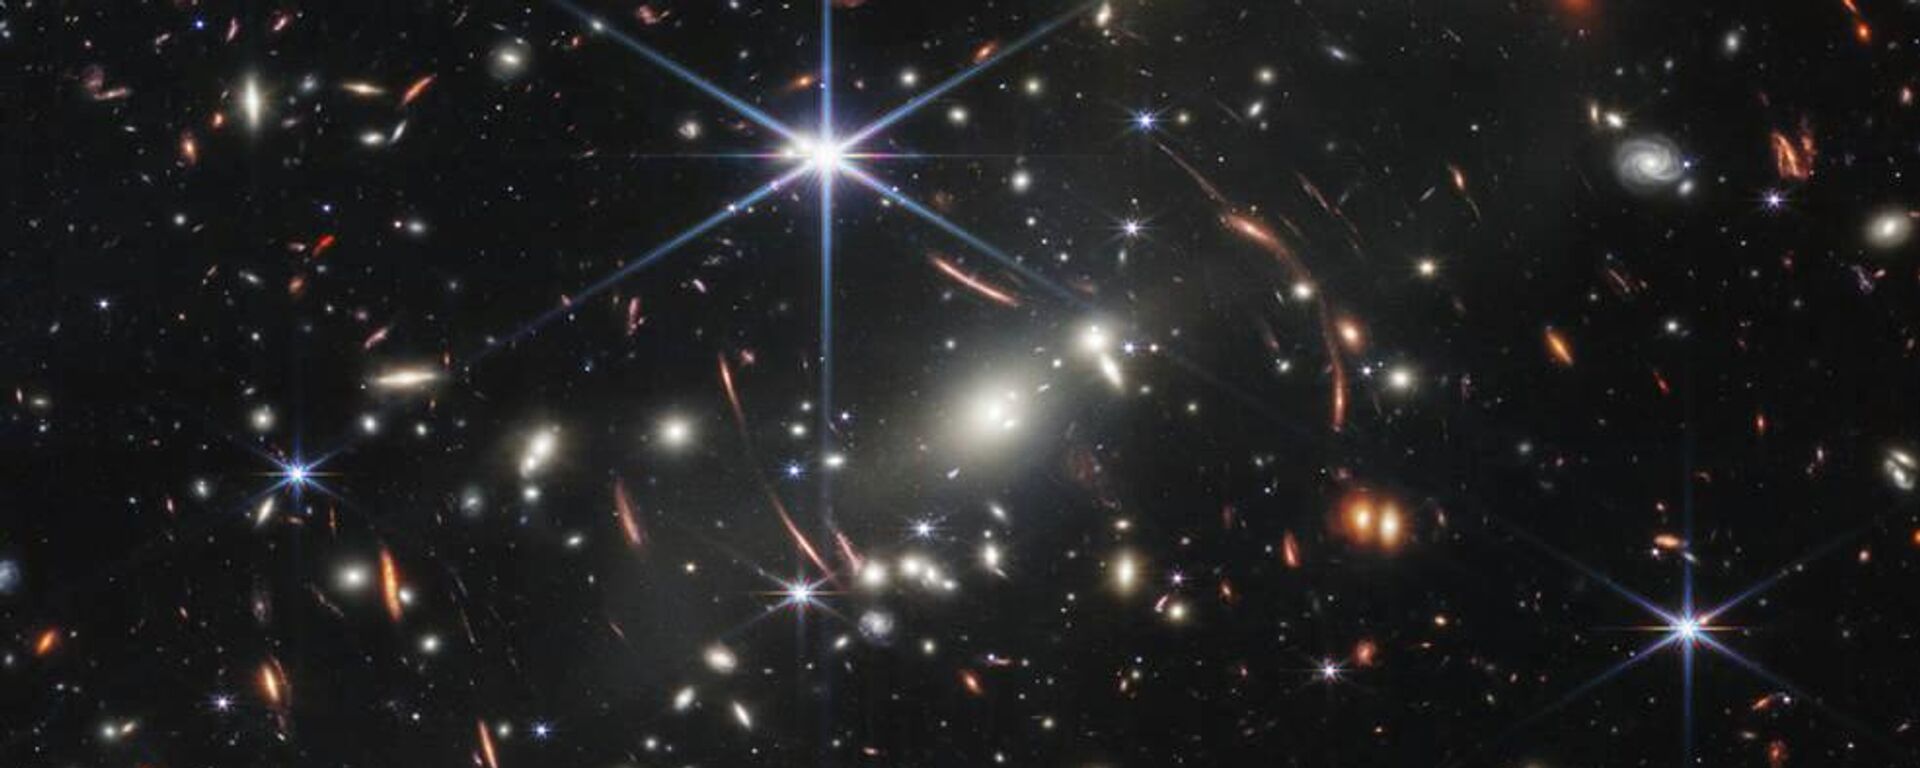 El universo profundo captado por el telescopio James Webb. - Sputnik Mundo, 1920, 12.07.2022